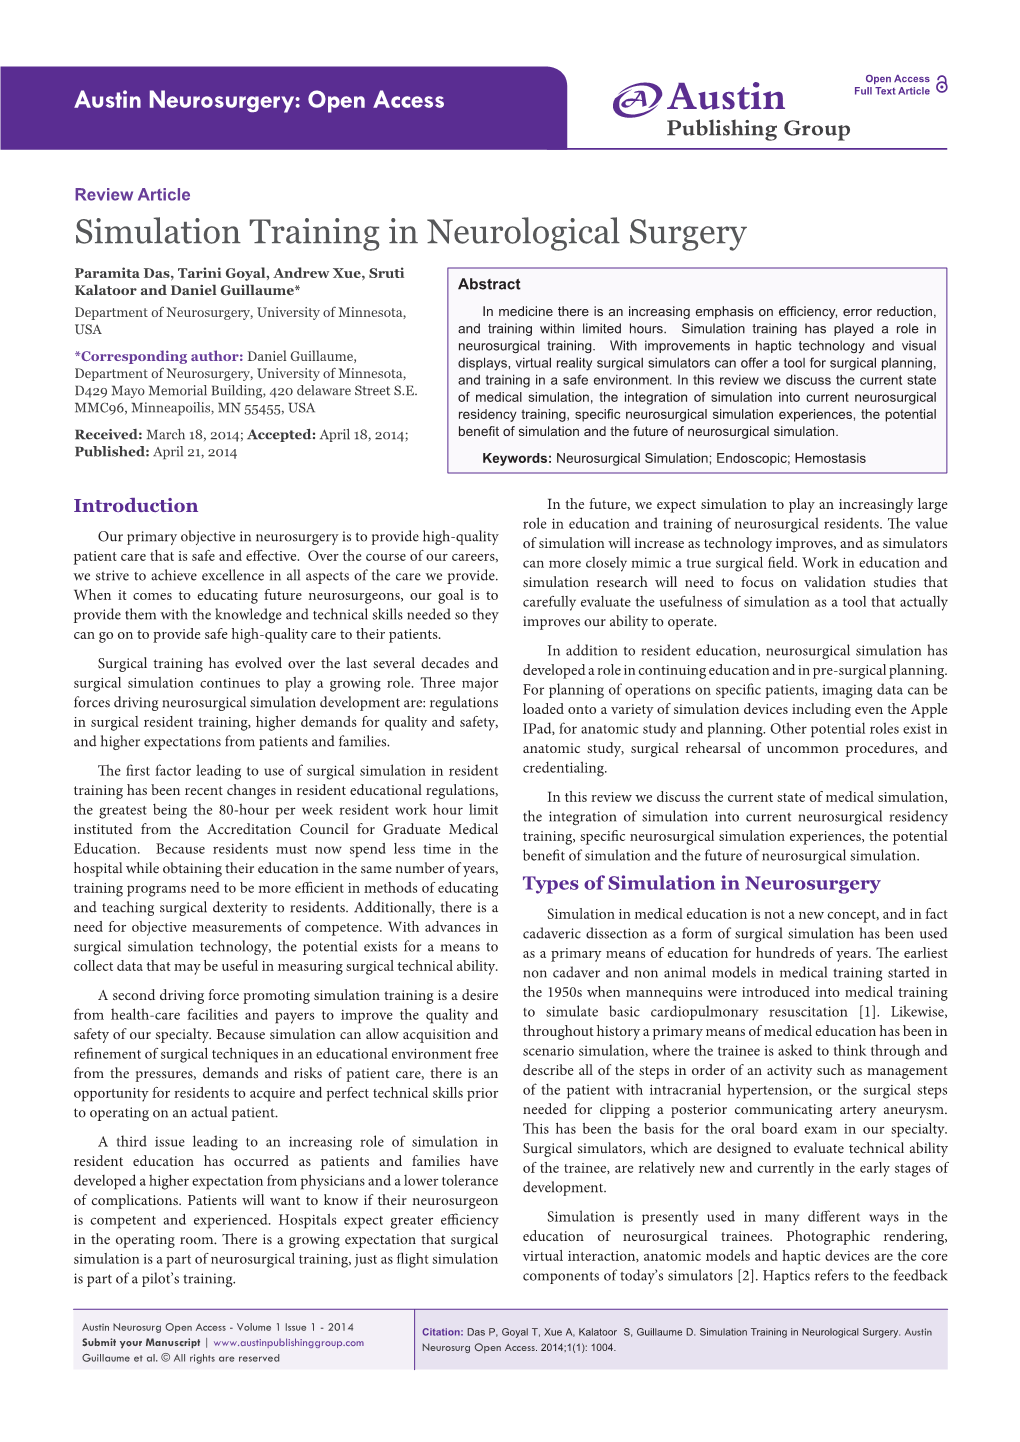 Simulation Training in Neurological Surgery